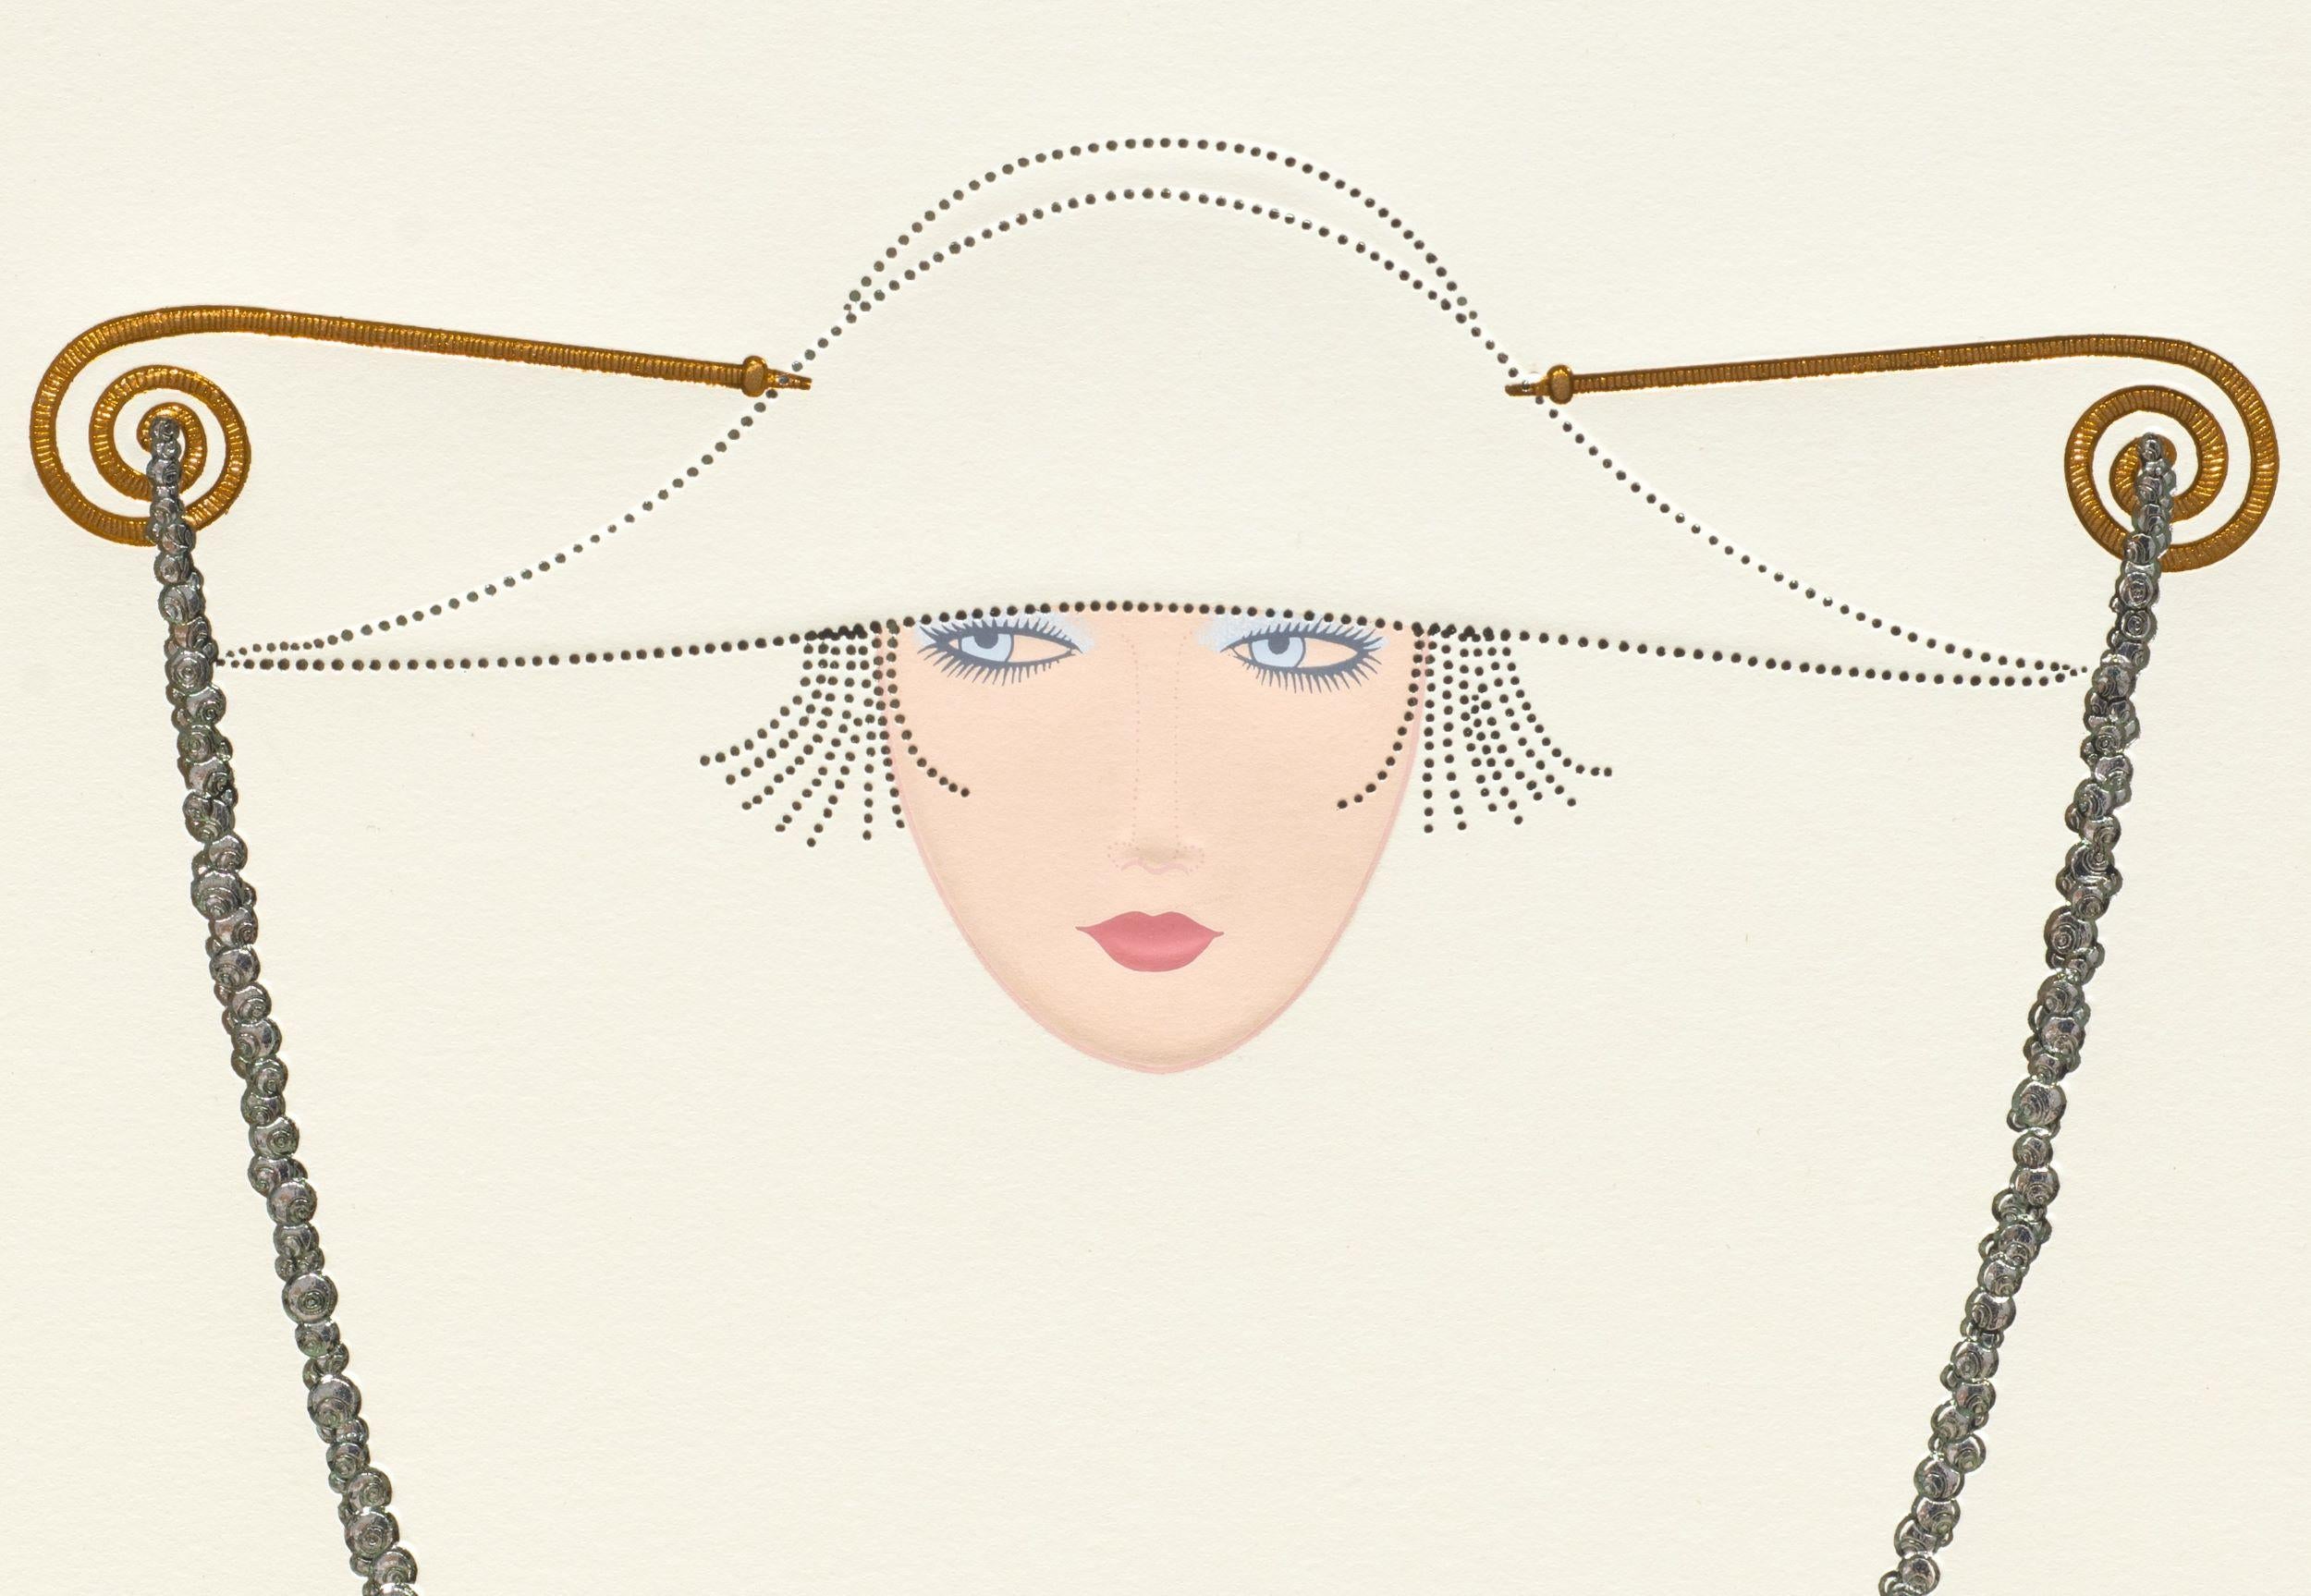 Hat and Chain - Art Deco Print by Erte - Romain de Tirtoff